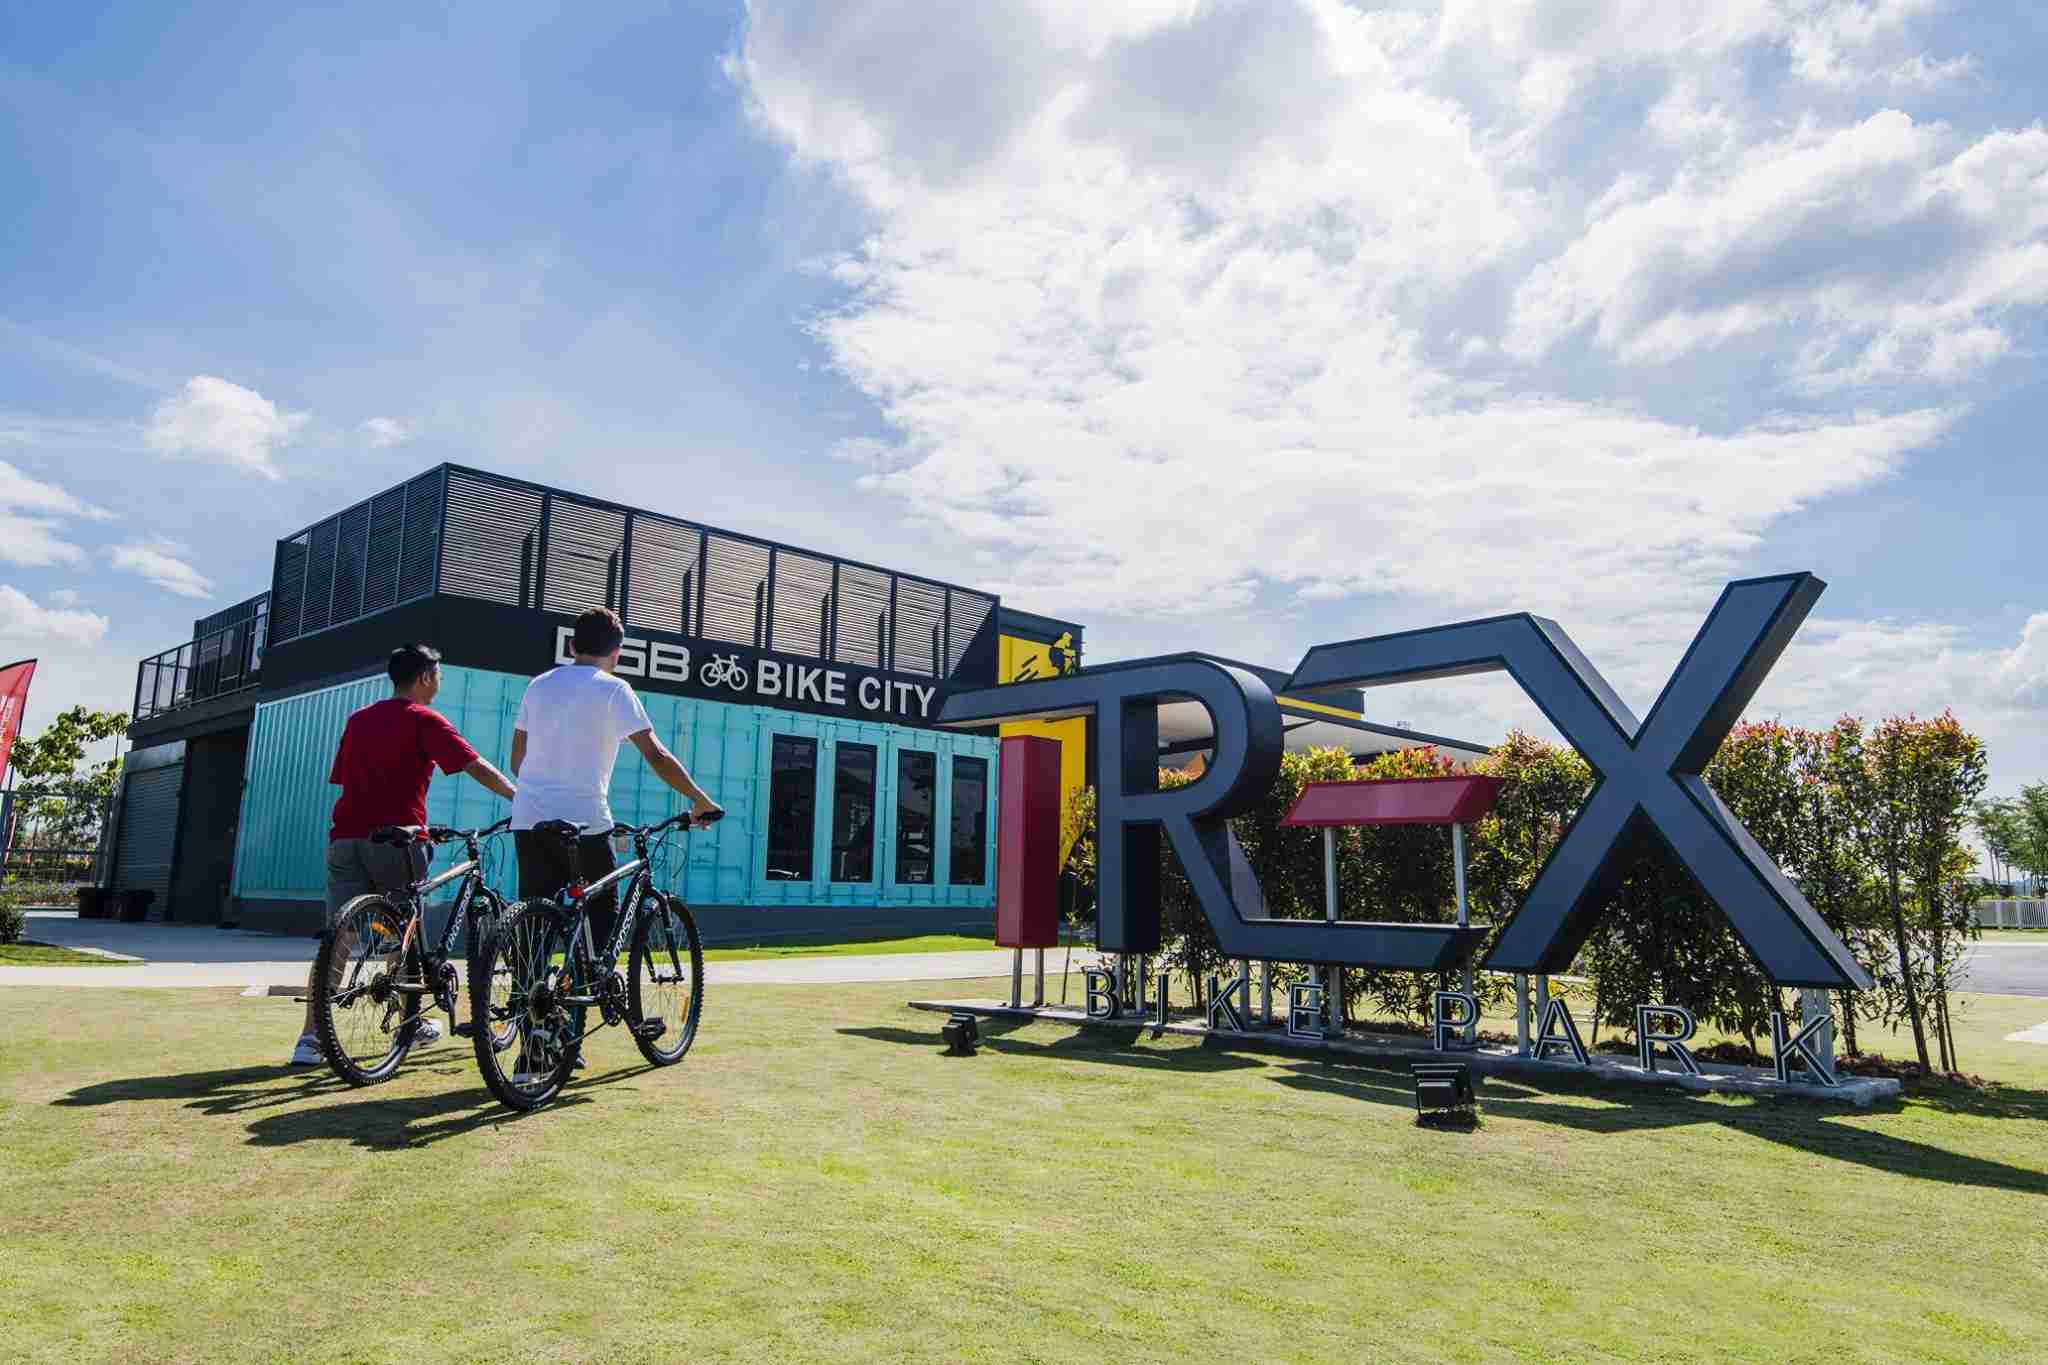 TREX Bike Park
